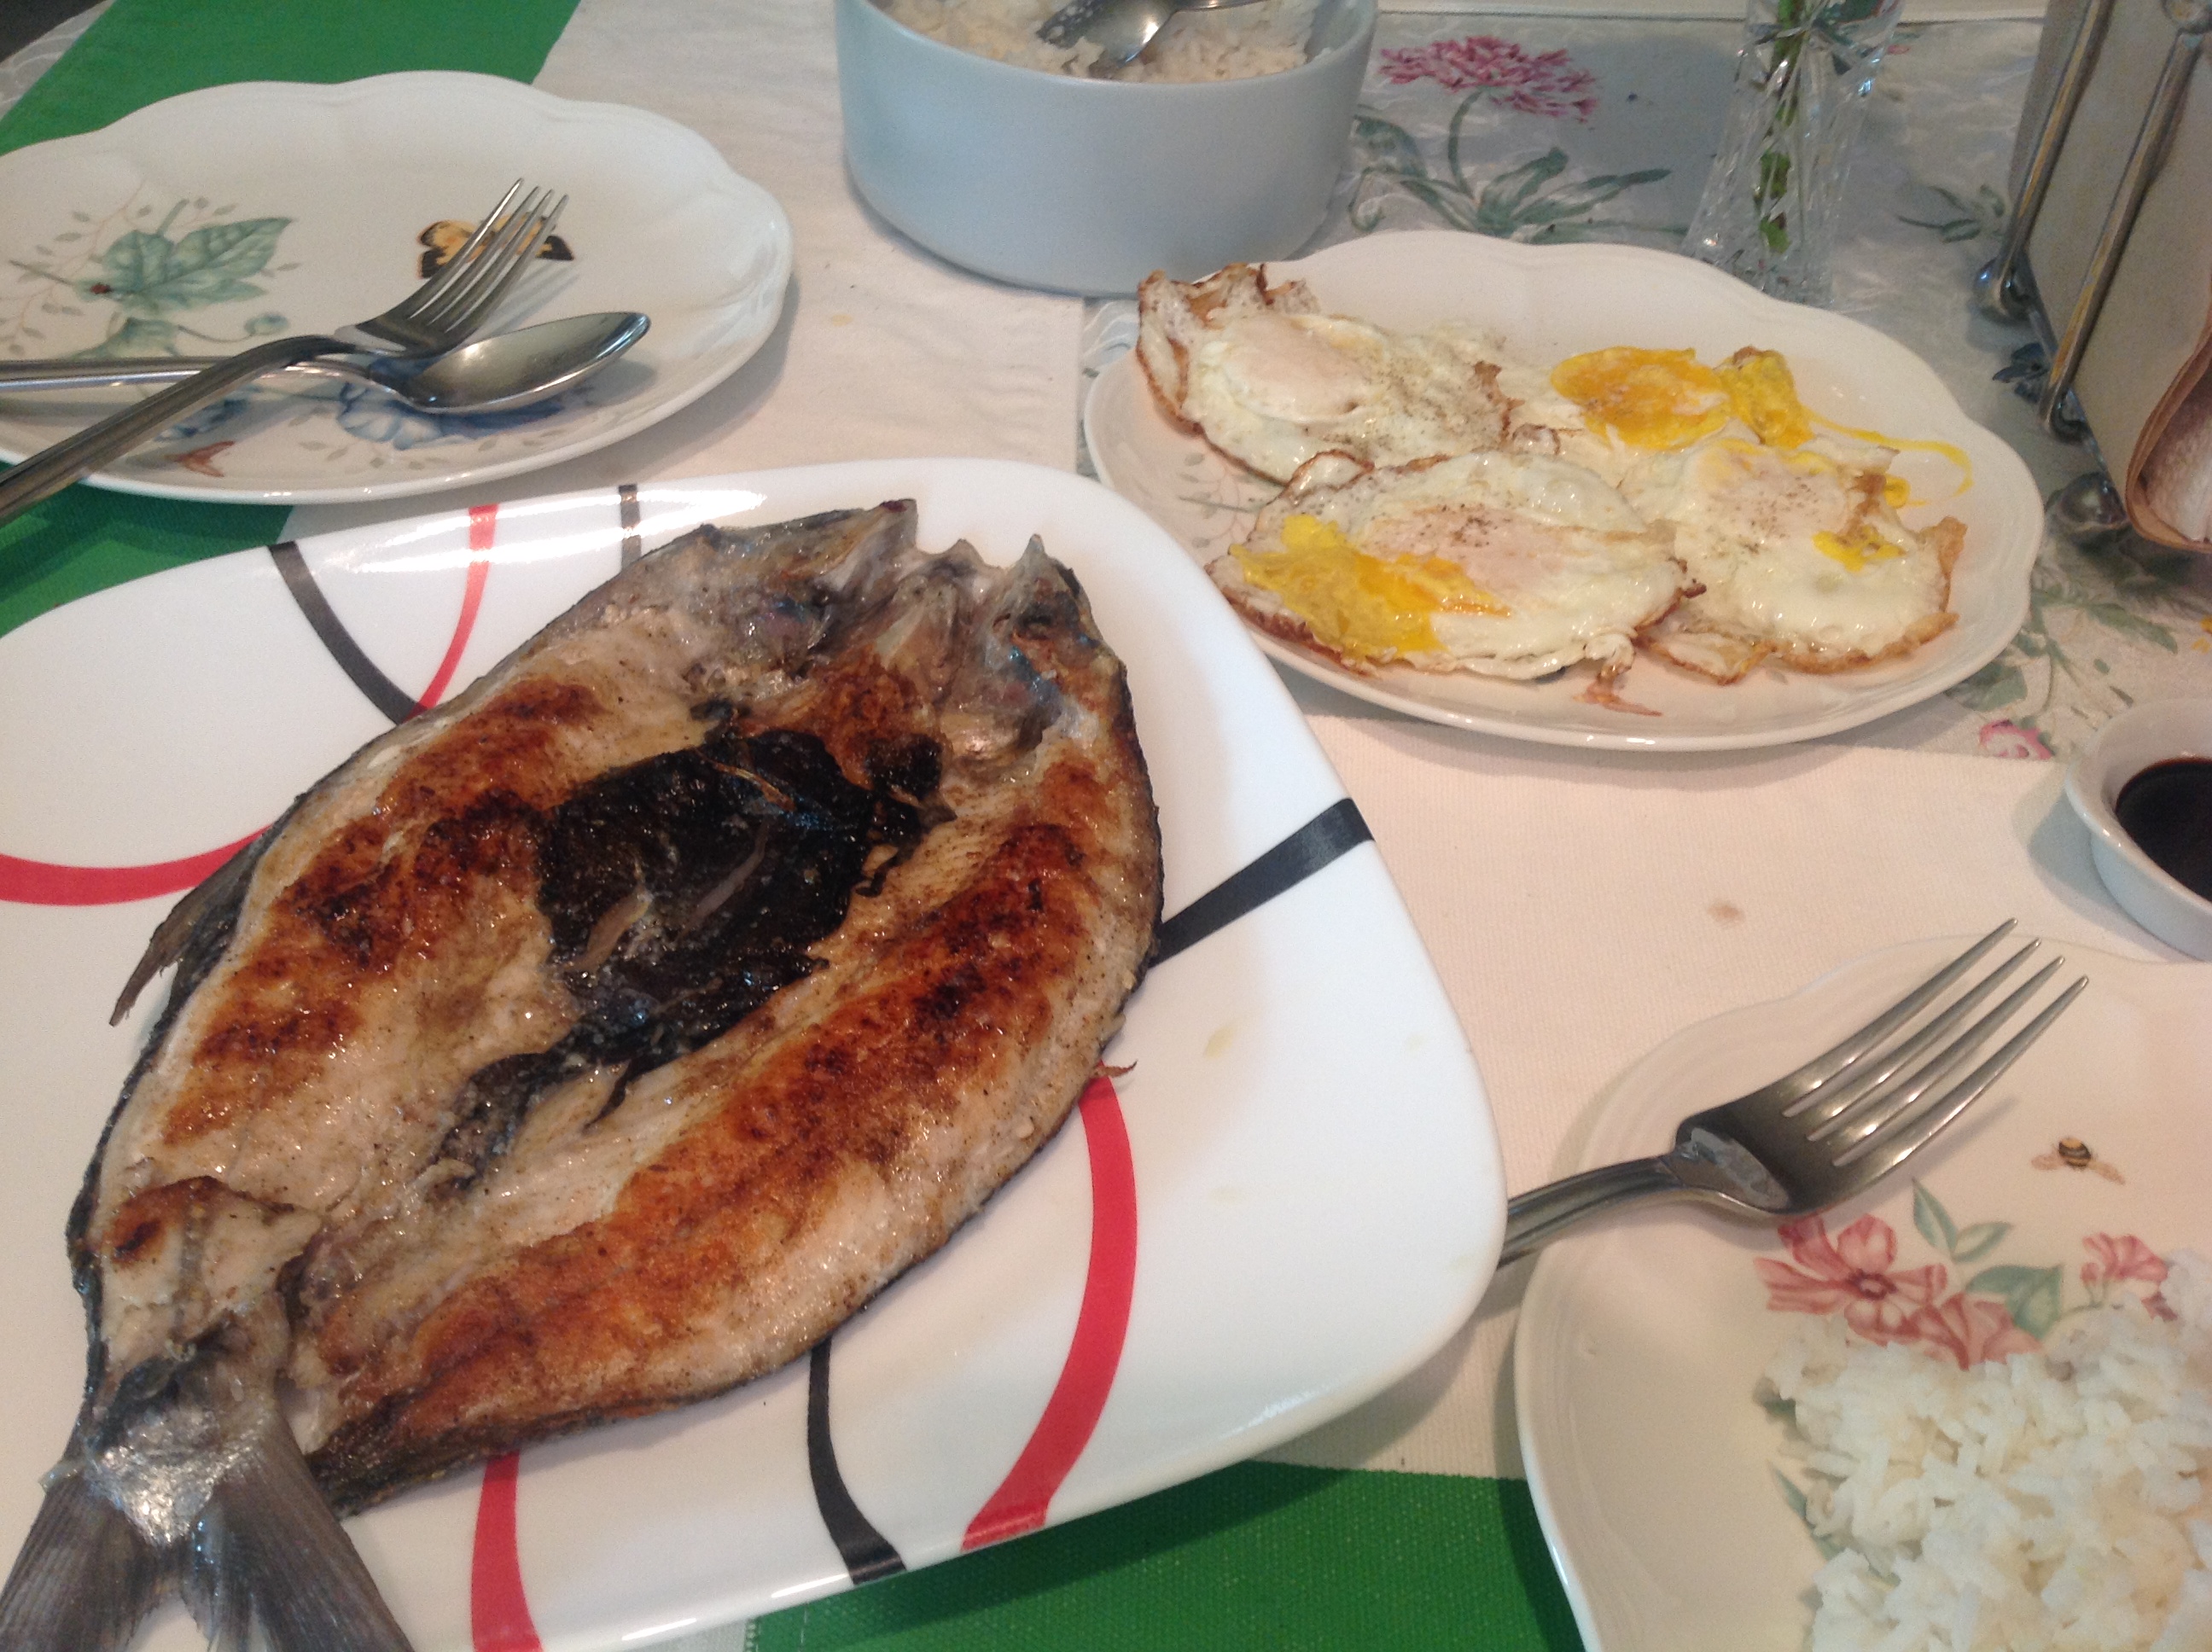 Filipino breakfast for dinner! Milkfish and eggs.